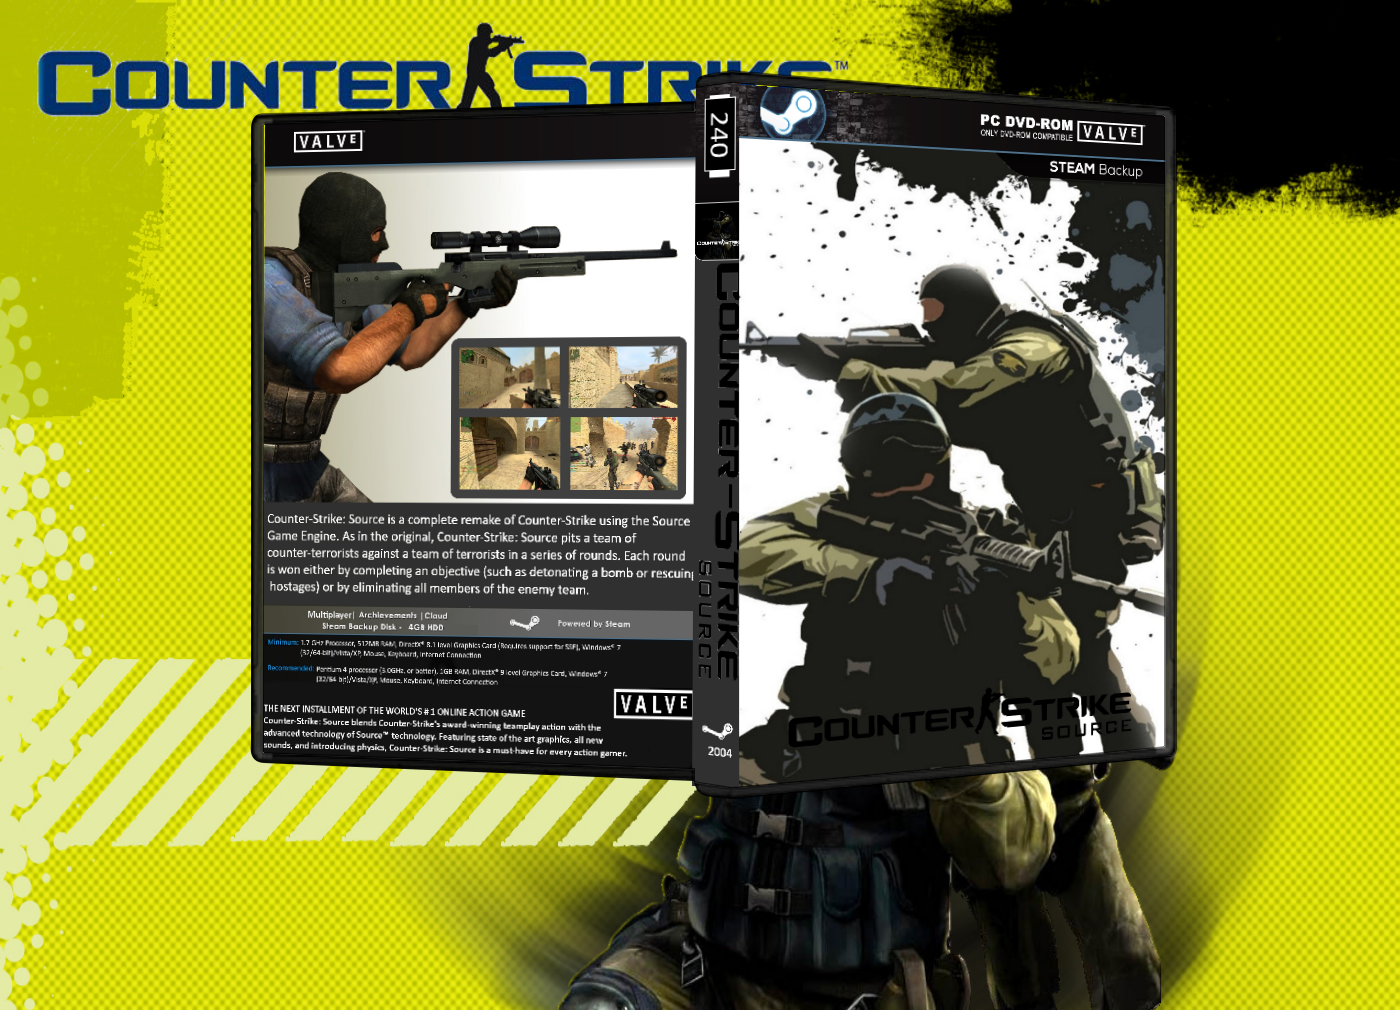 Counter Strike : Source box cover